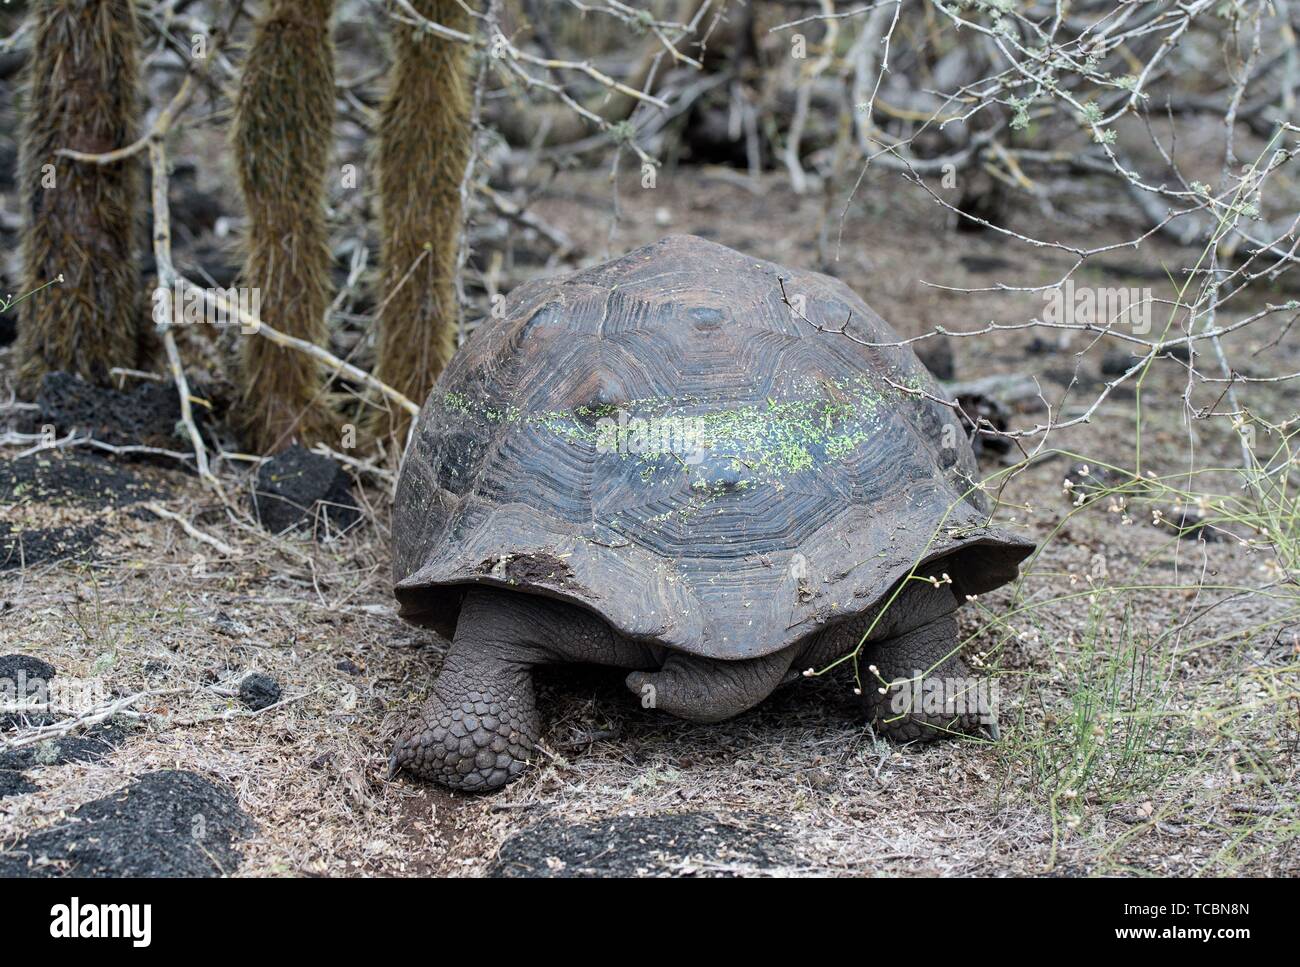 Galápagos giant tortoise (Chelonoidis nigra ssp), in situ, Isabela Island, Galapagos Islands, Ecuador. Stock Photo